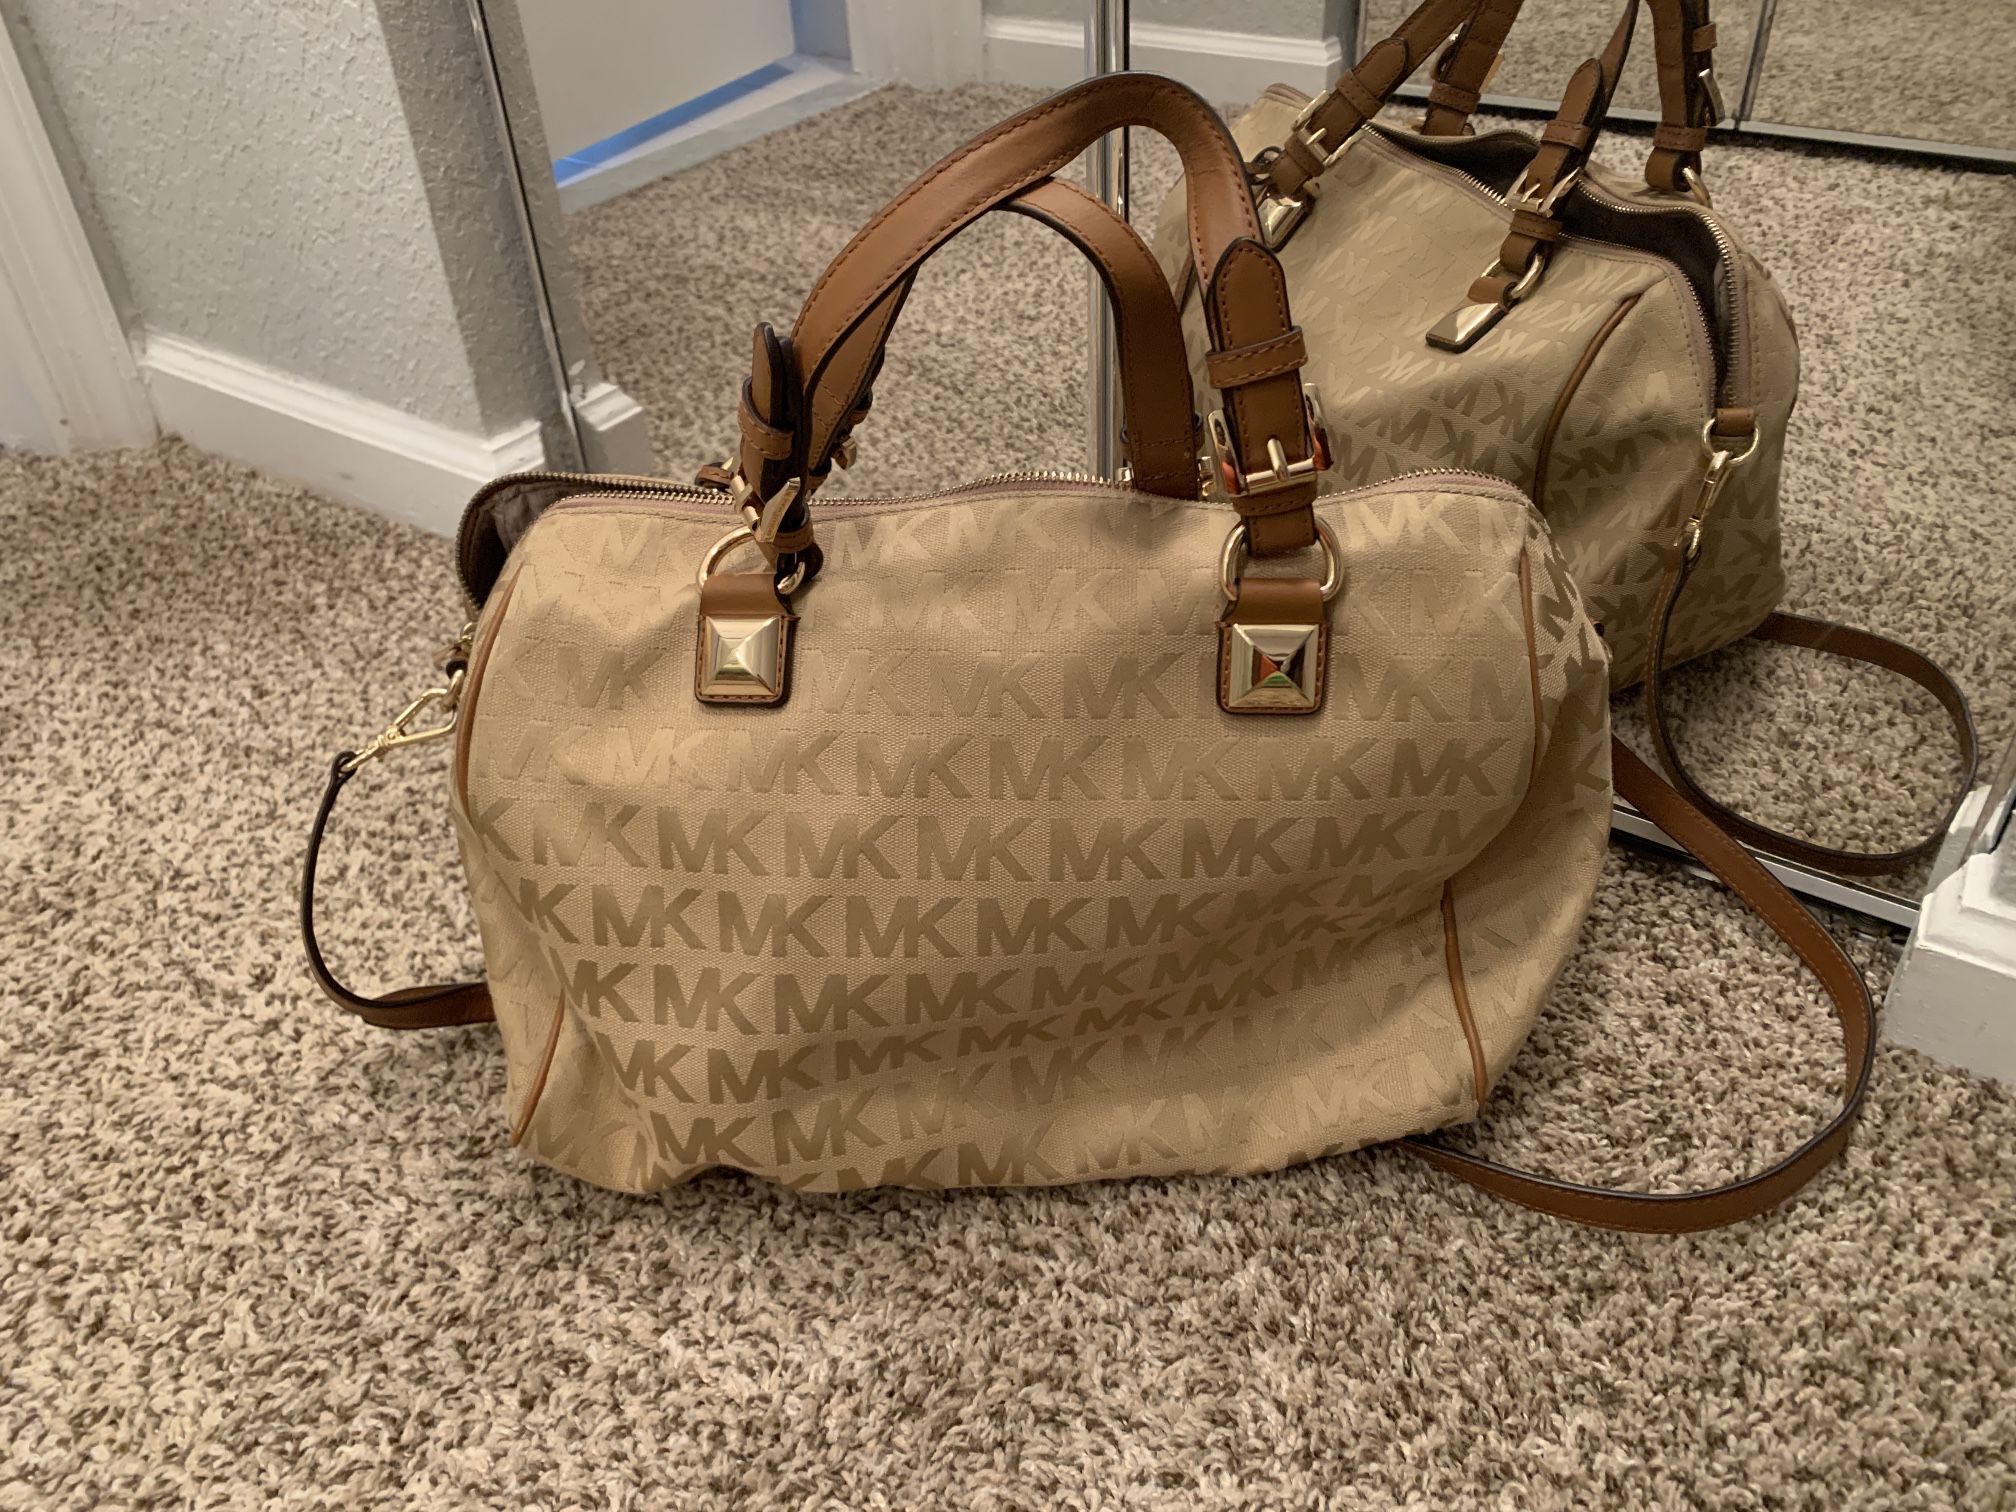 Micheal Kors Medium/Large purse